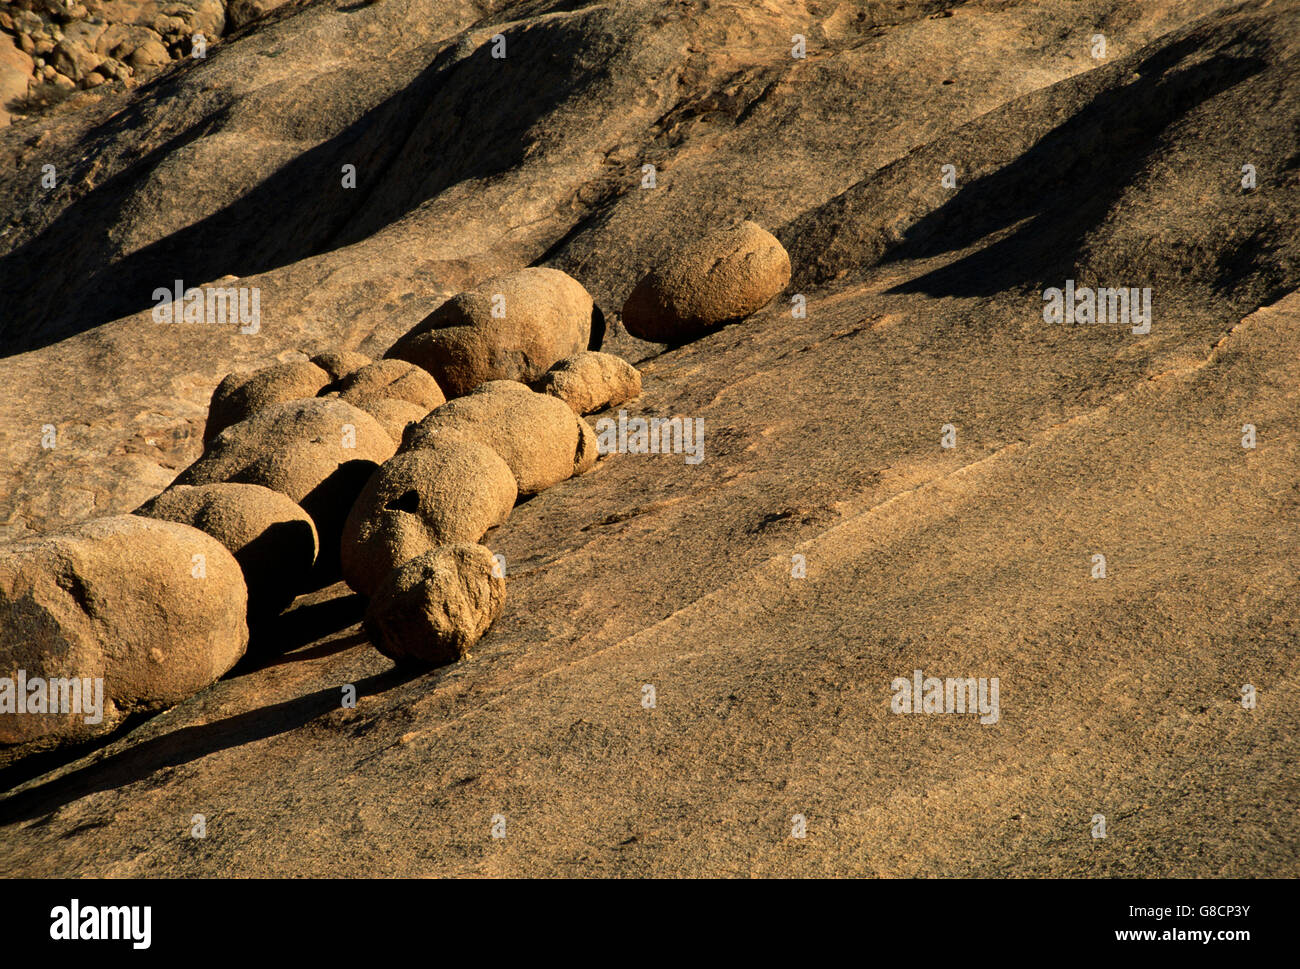 Boulders, Spitzkoppe, Namibia. Stock Photo